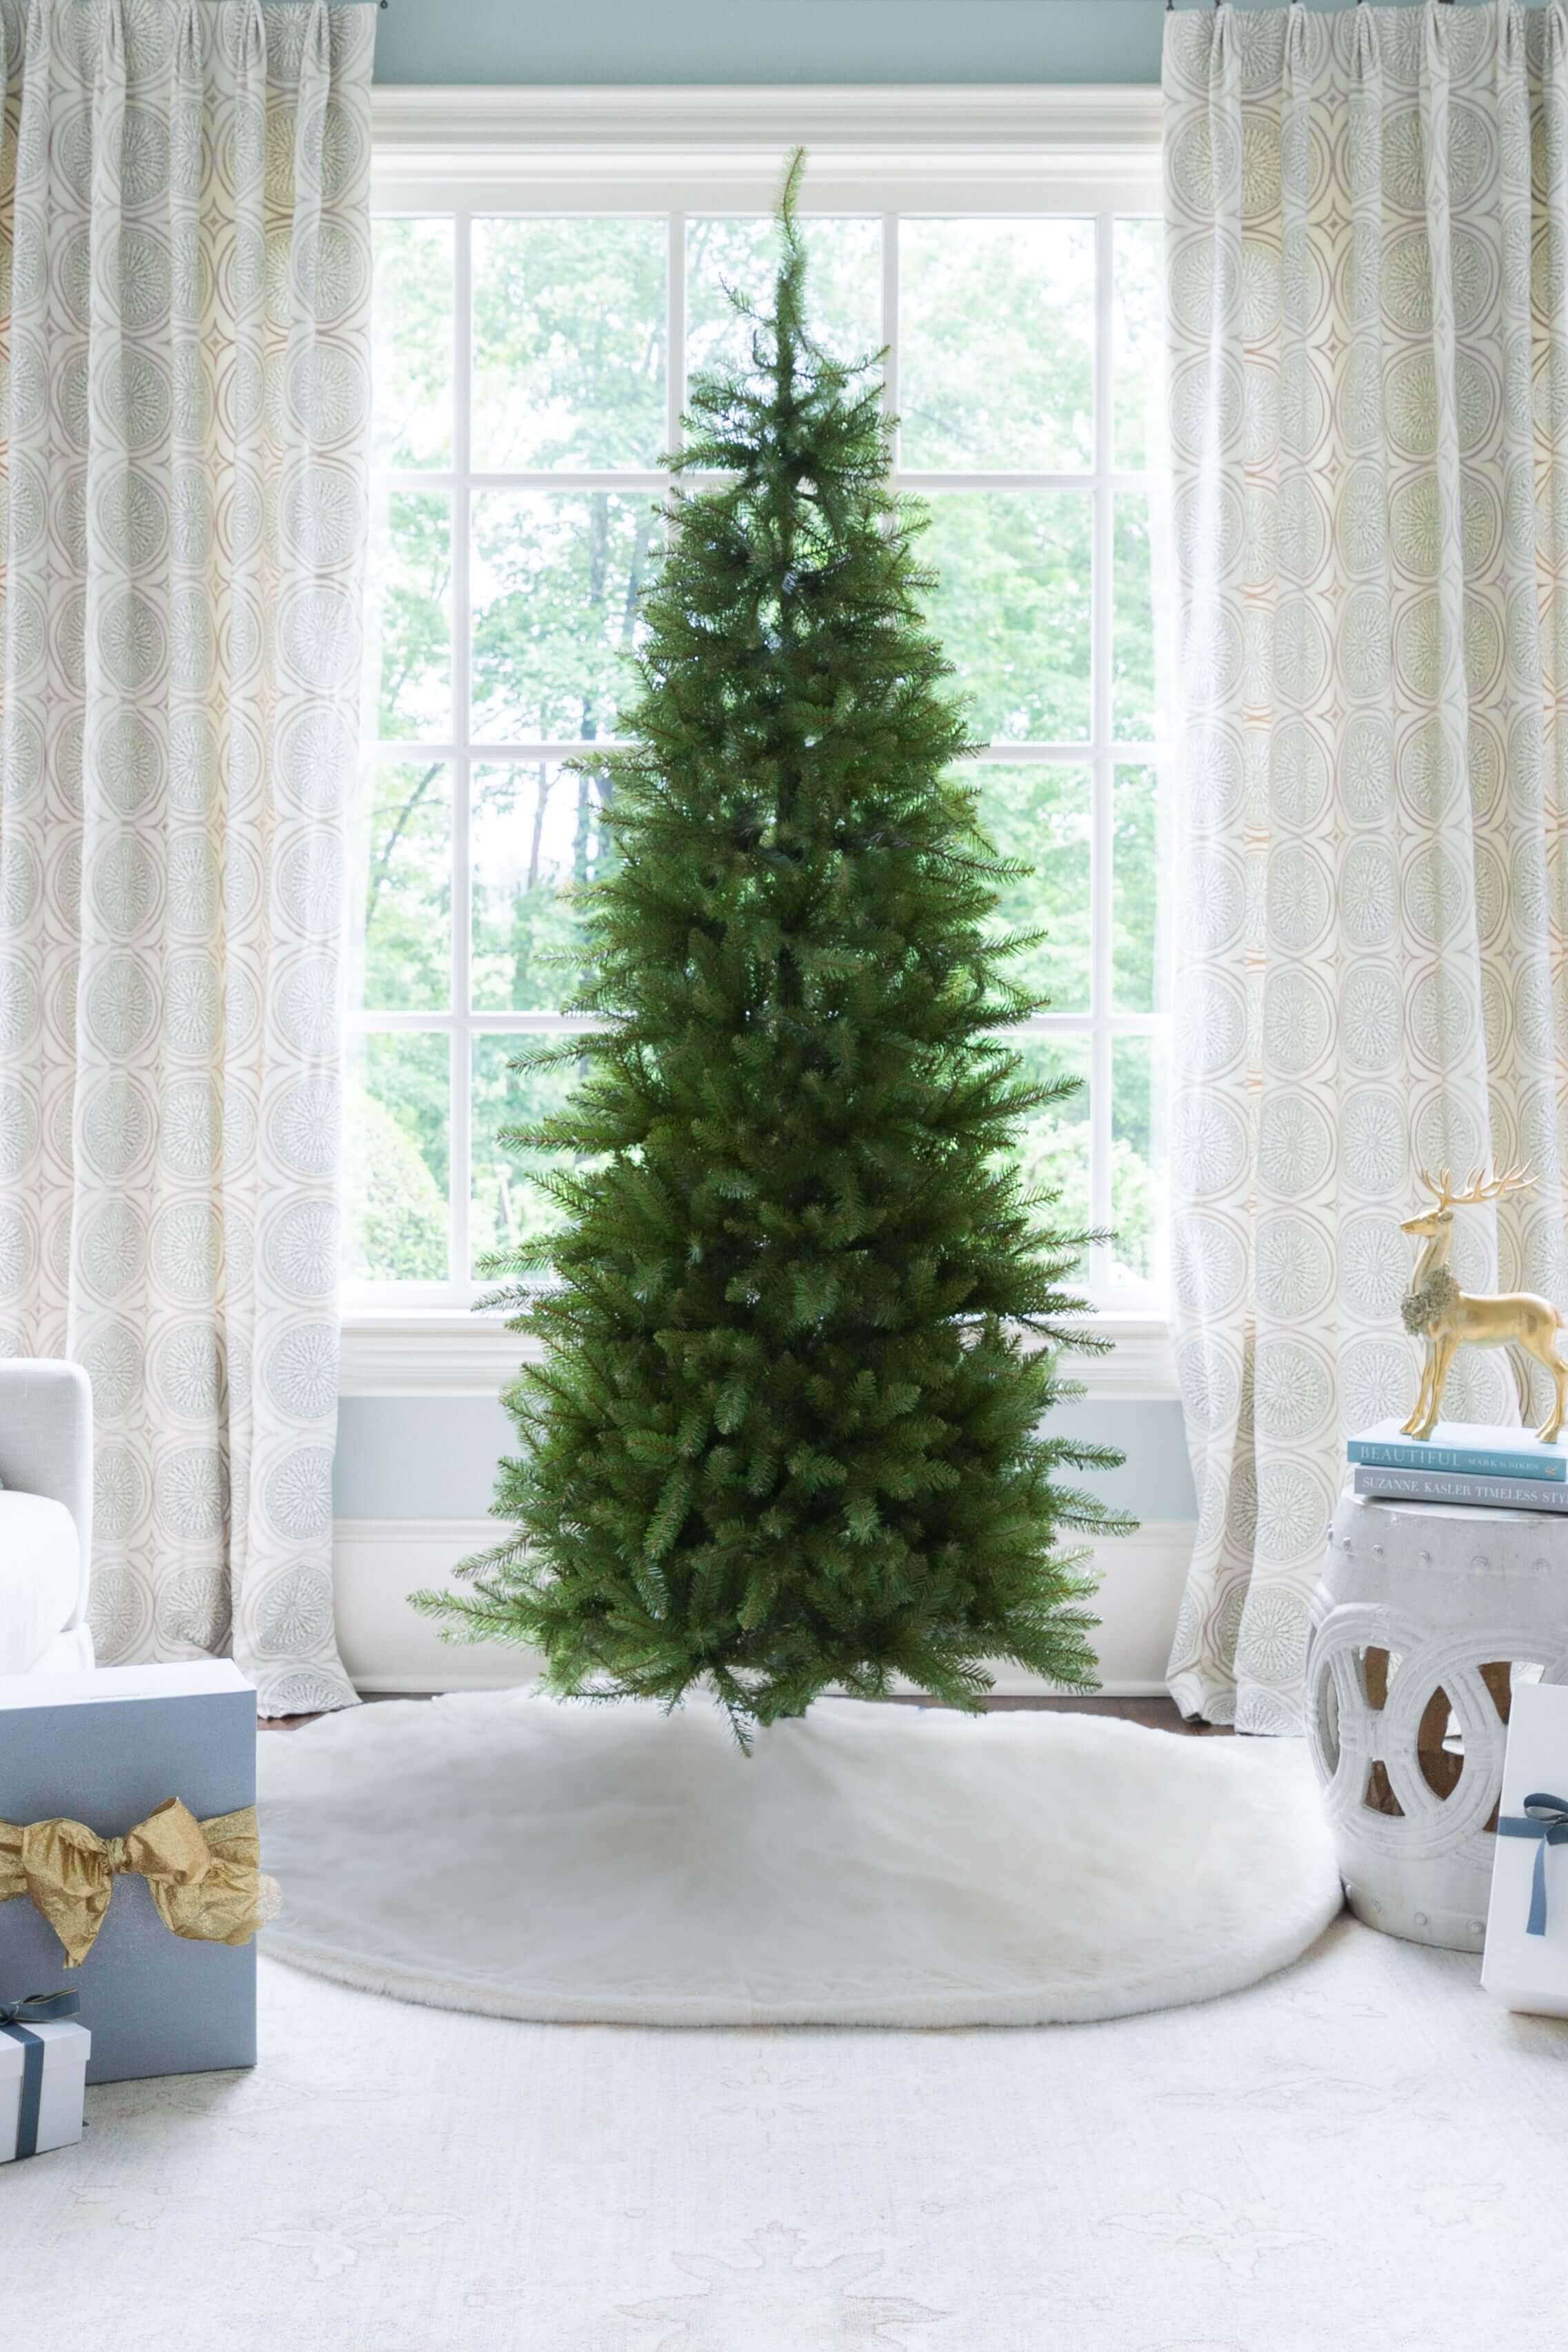 King of Christmas 7.5' Yorkshire Fir Slim Artificial Christmas Tree with 500 Warm White LED Lights